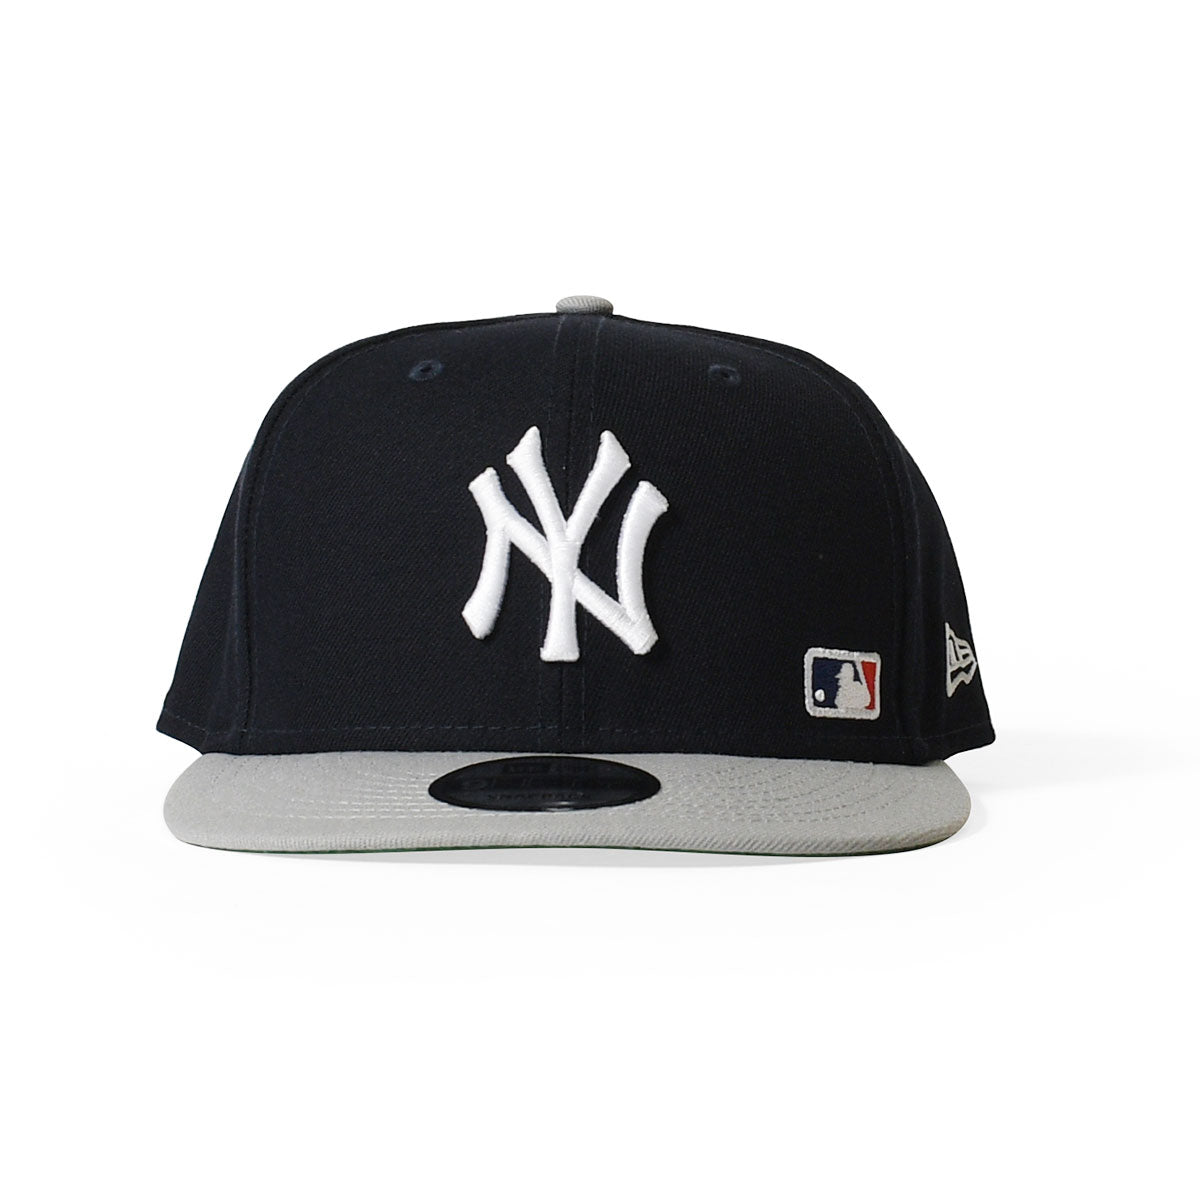 NEW ERA New York Yankees Black letter 9FIFTY